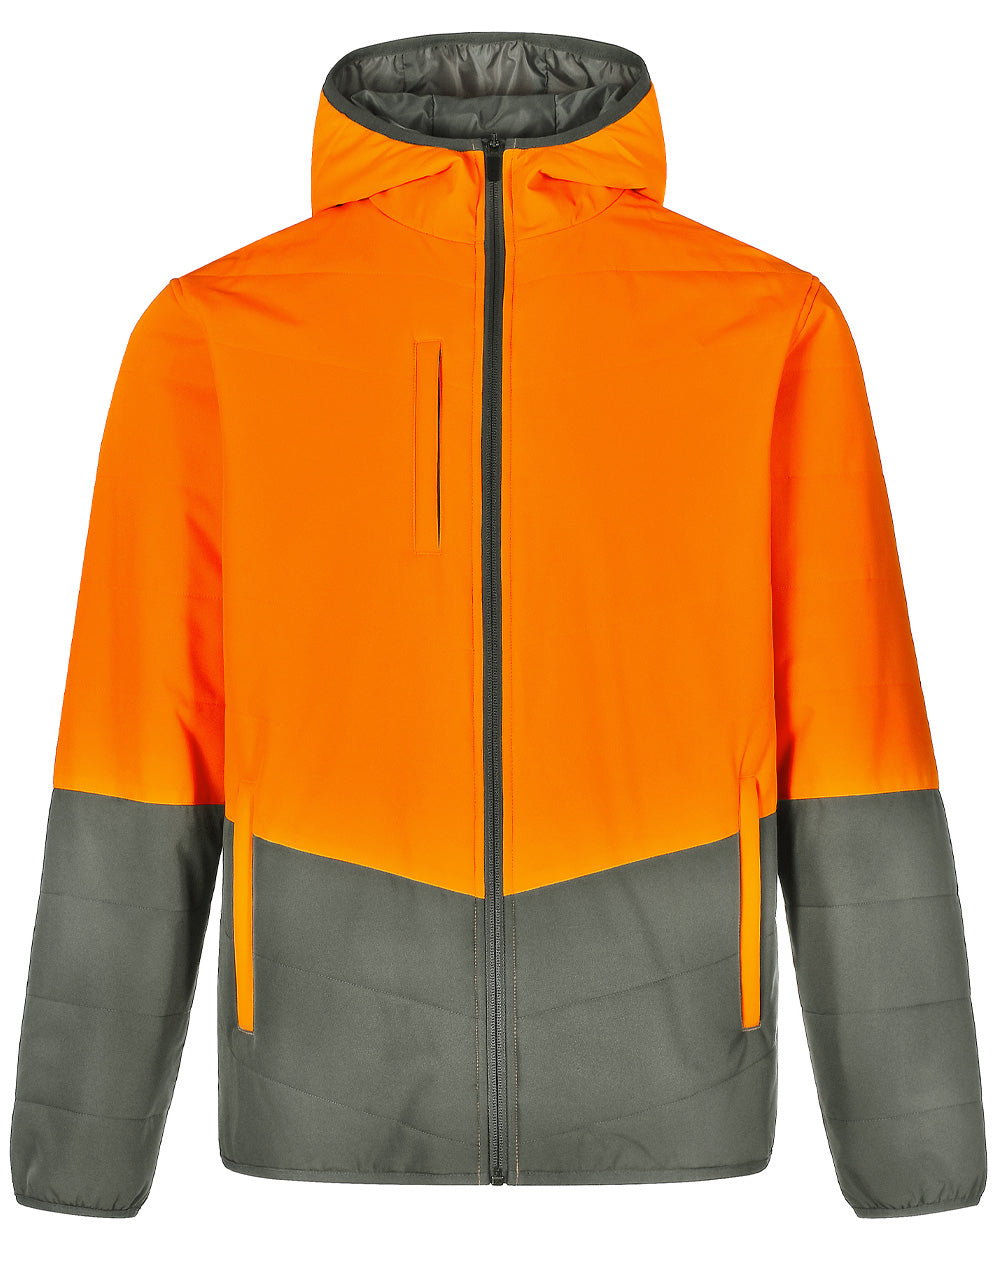 Winning Spirit hoodie in orange